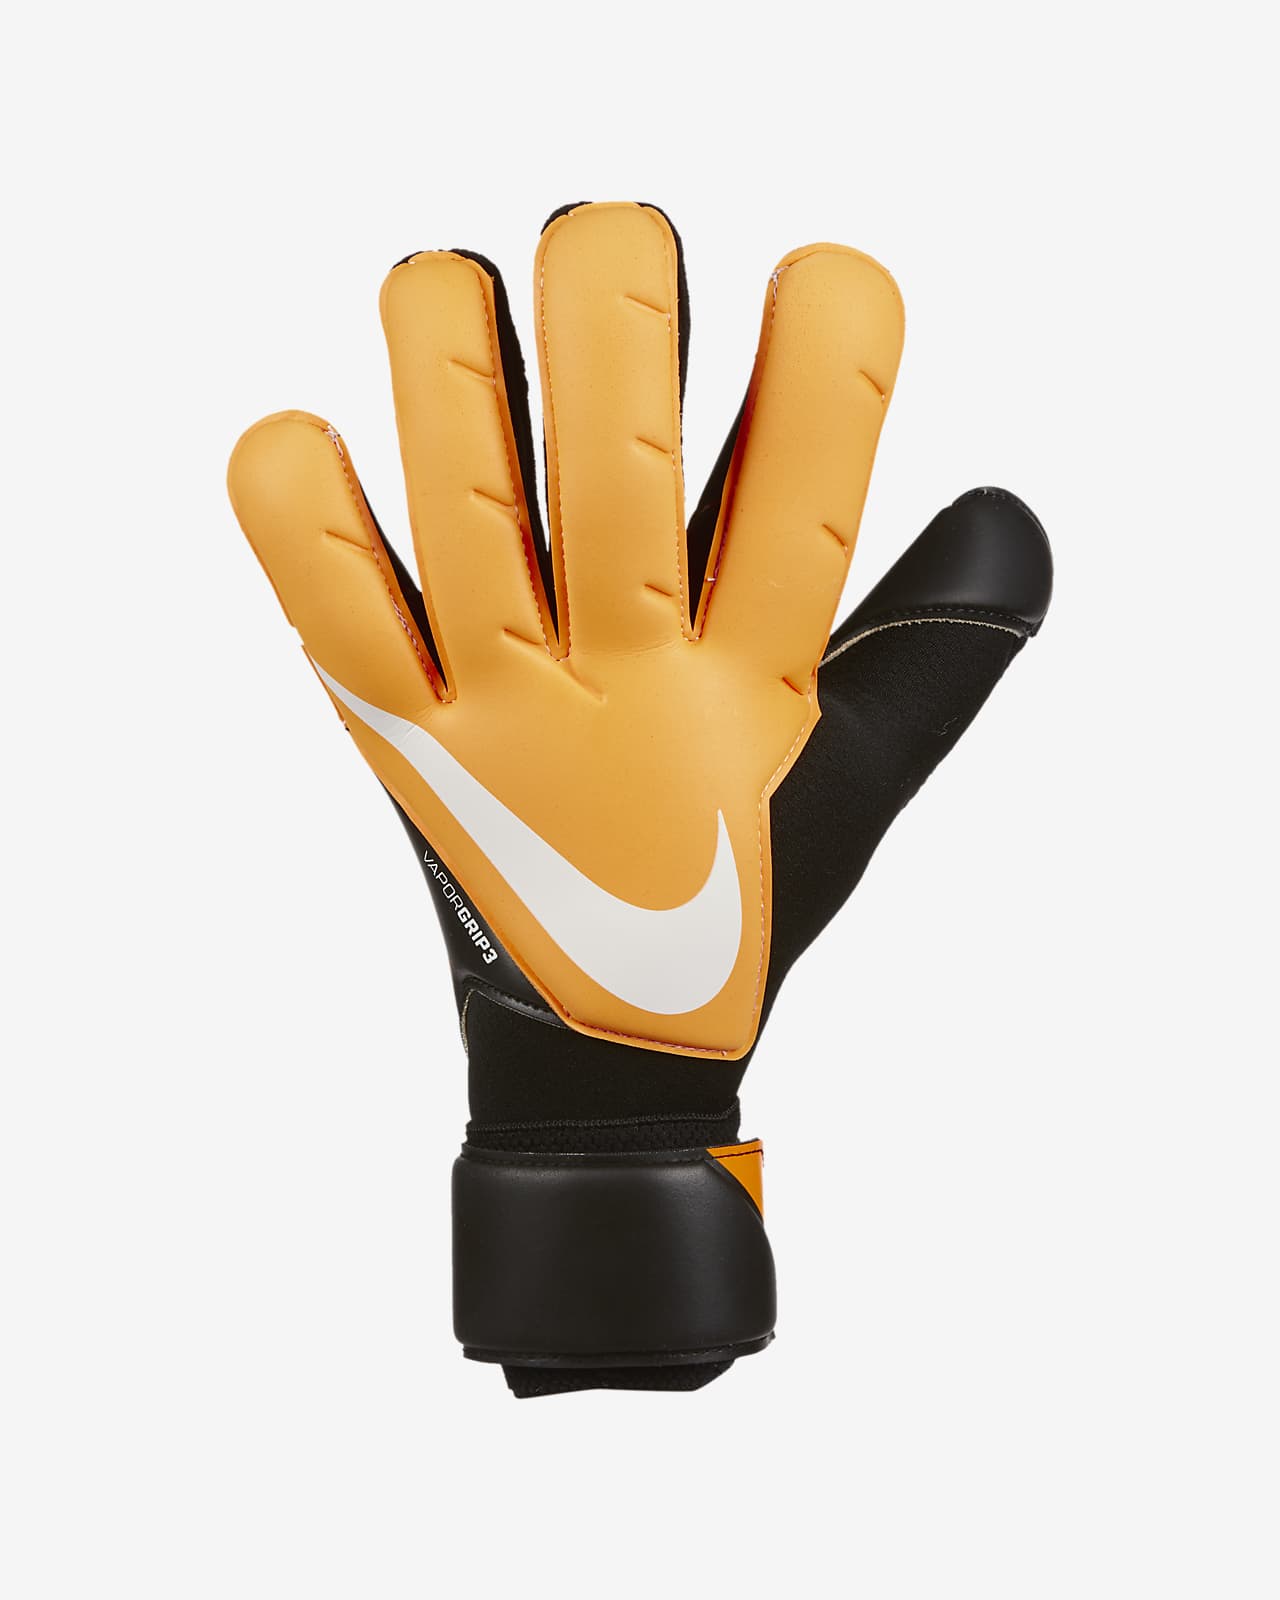 nike goalkeeper gloves orange